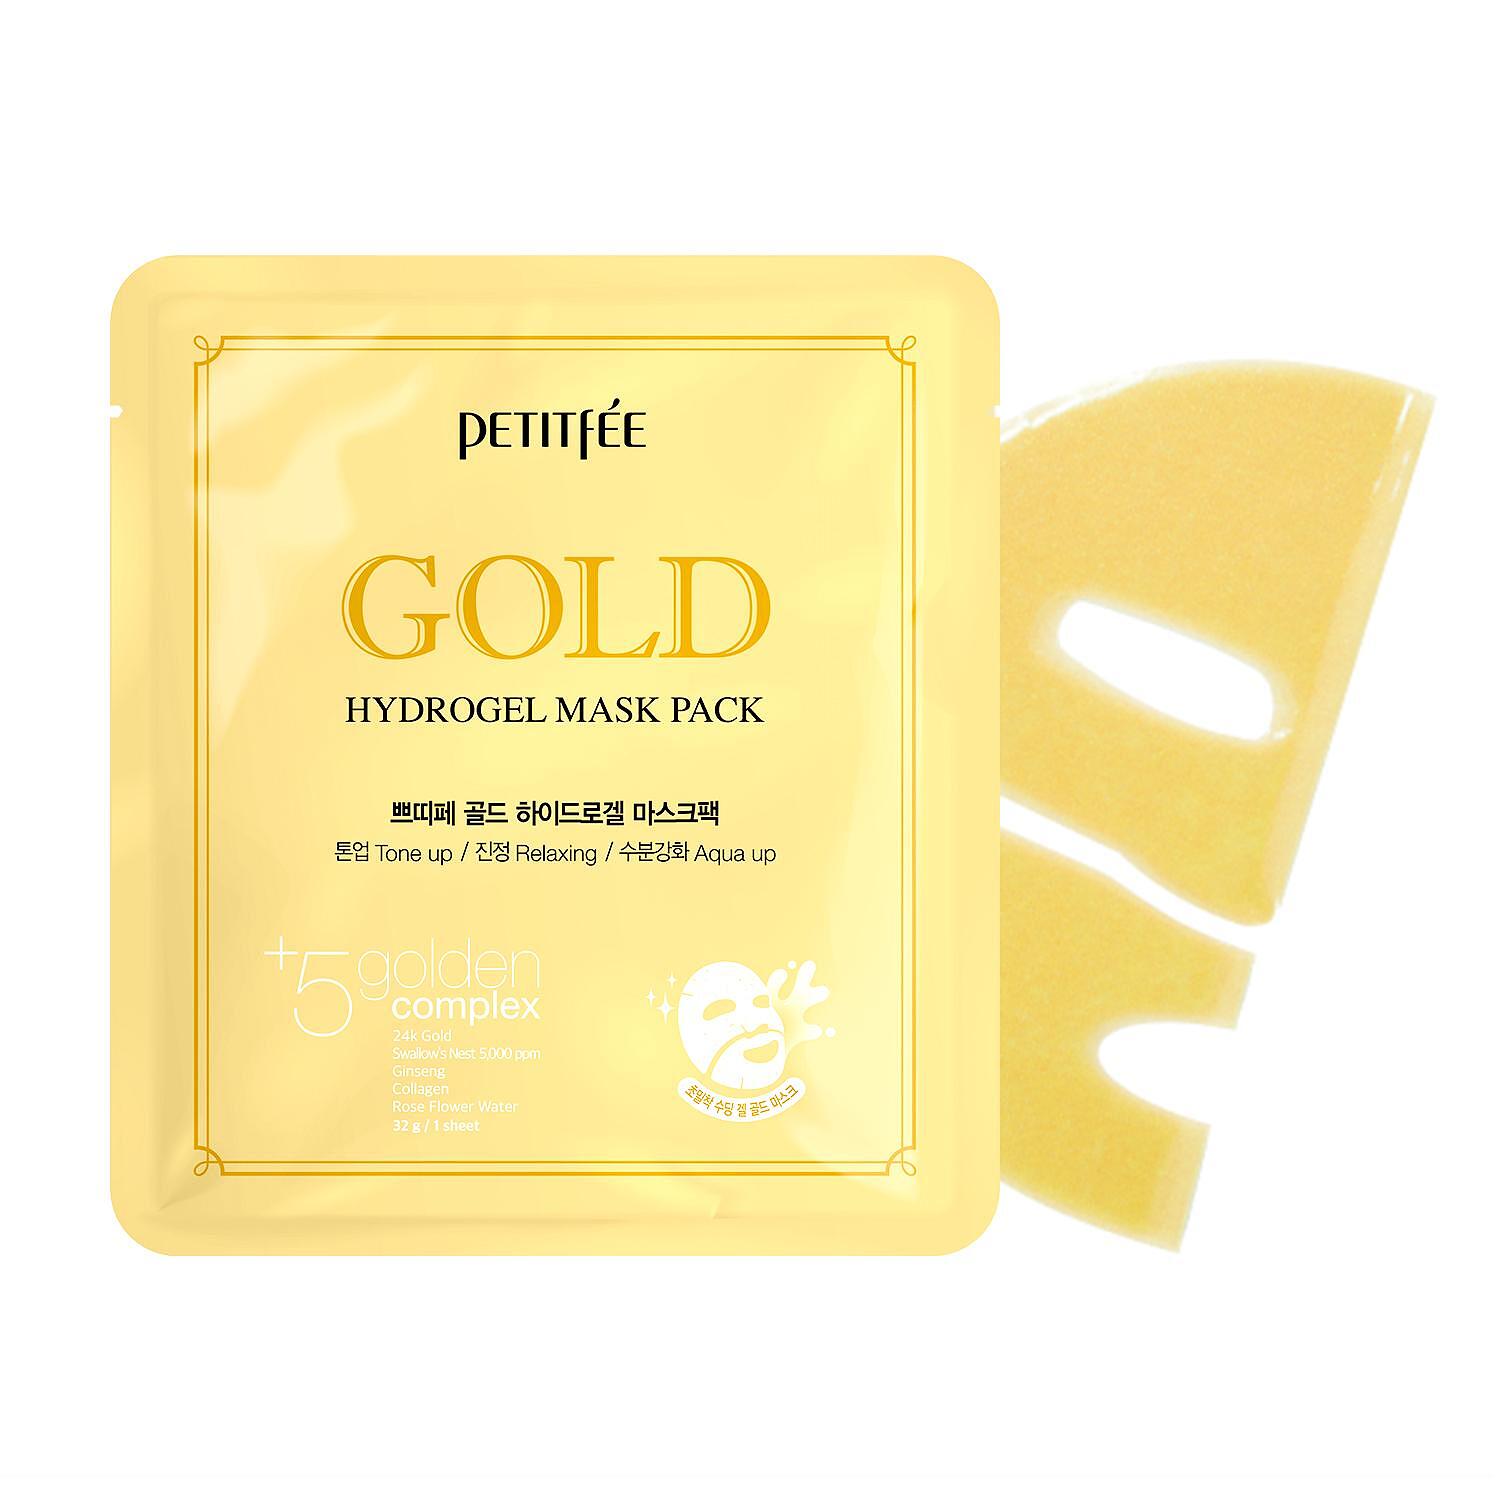 PETITFEE | Gold хидрогелна маска за лице с 24-каратово злато, 30 г